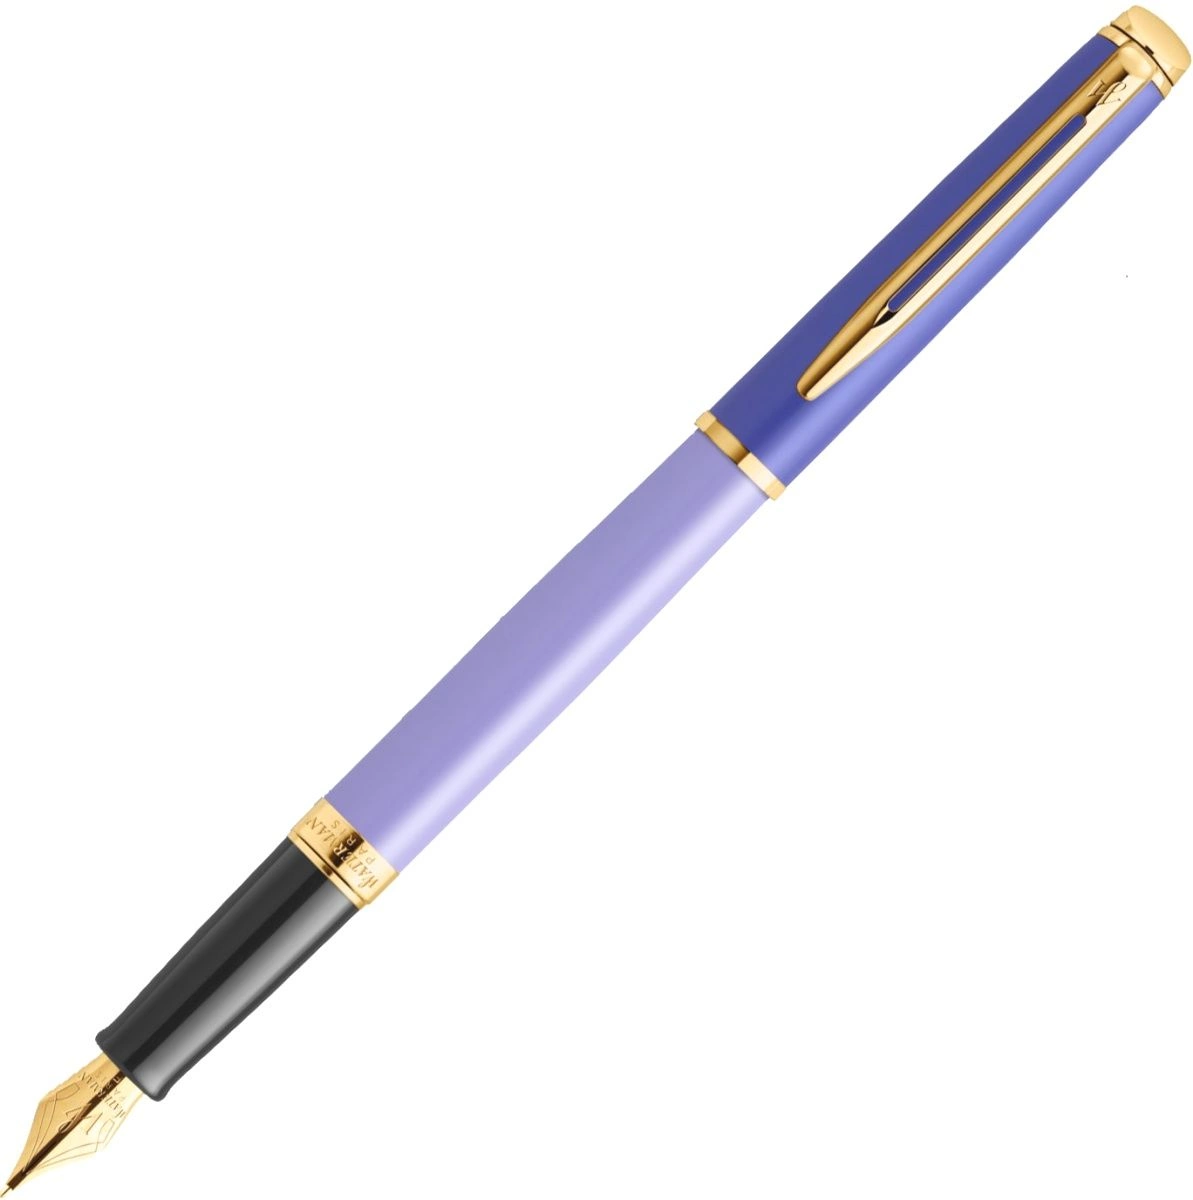 Ручка перьев. Waterman Hemisphere Colour Blocking (2179900) Purple GT F сталь нержавеющая/позолота F син. черн. подар.кор.